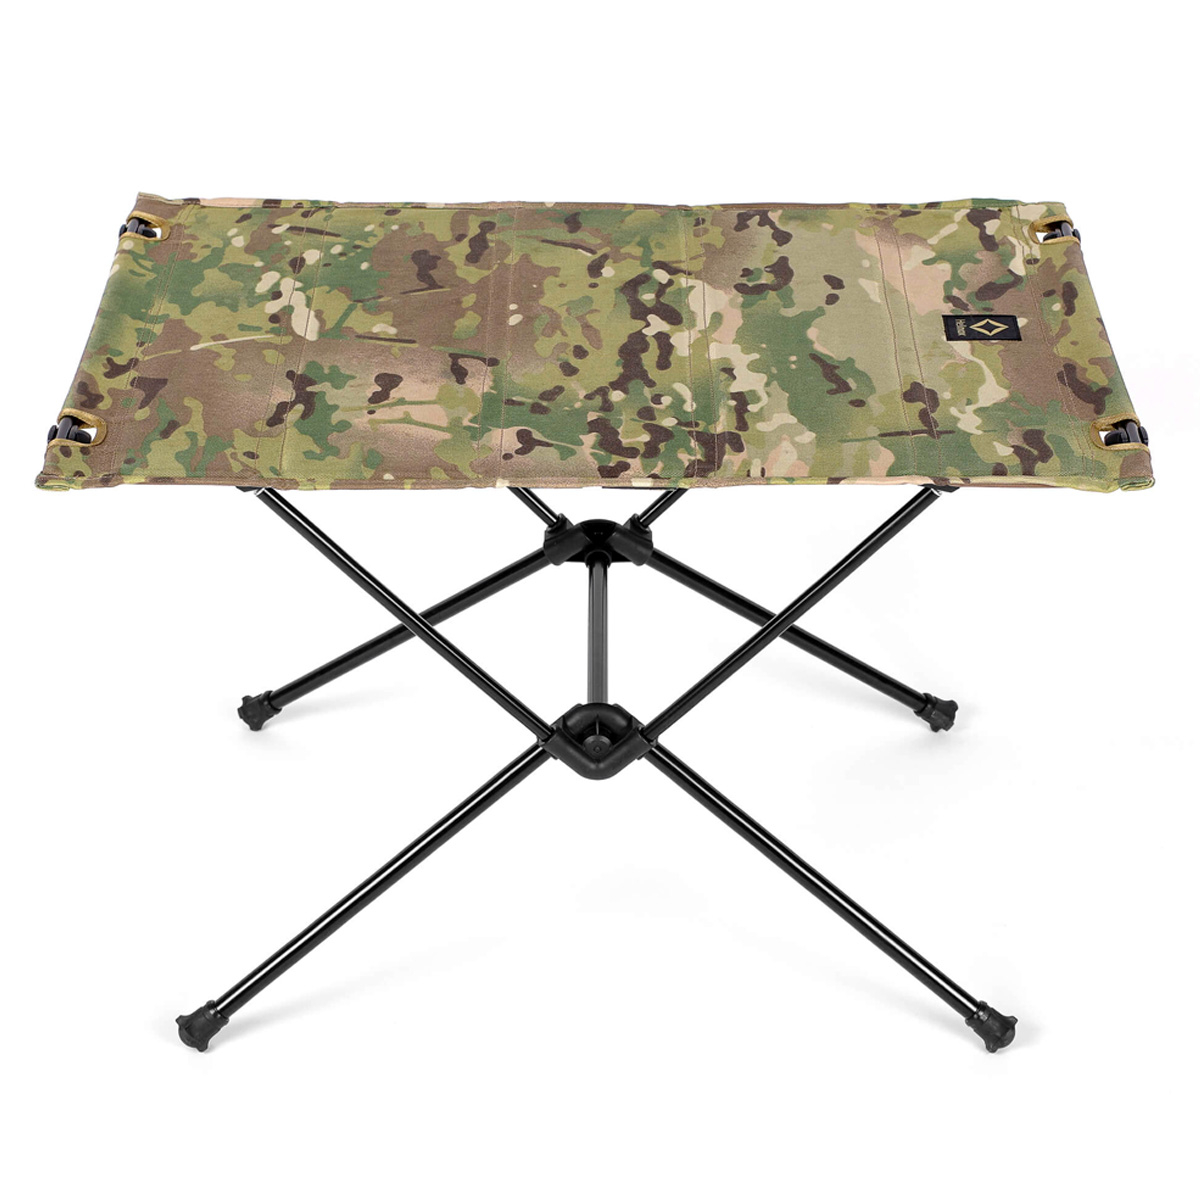 Helinox Tactical Table Regular MultiCam, portable, lightweight table